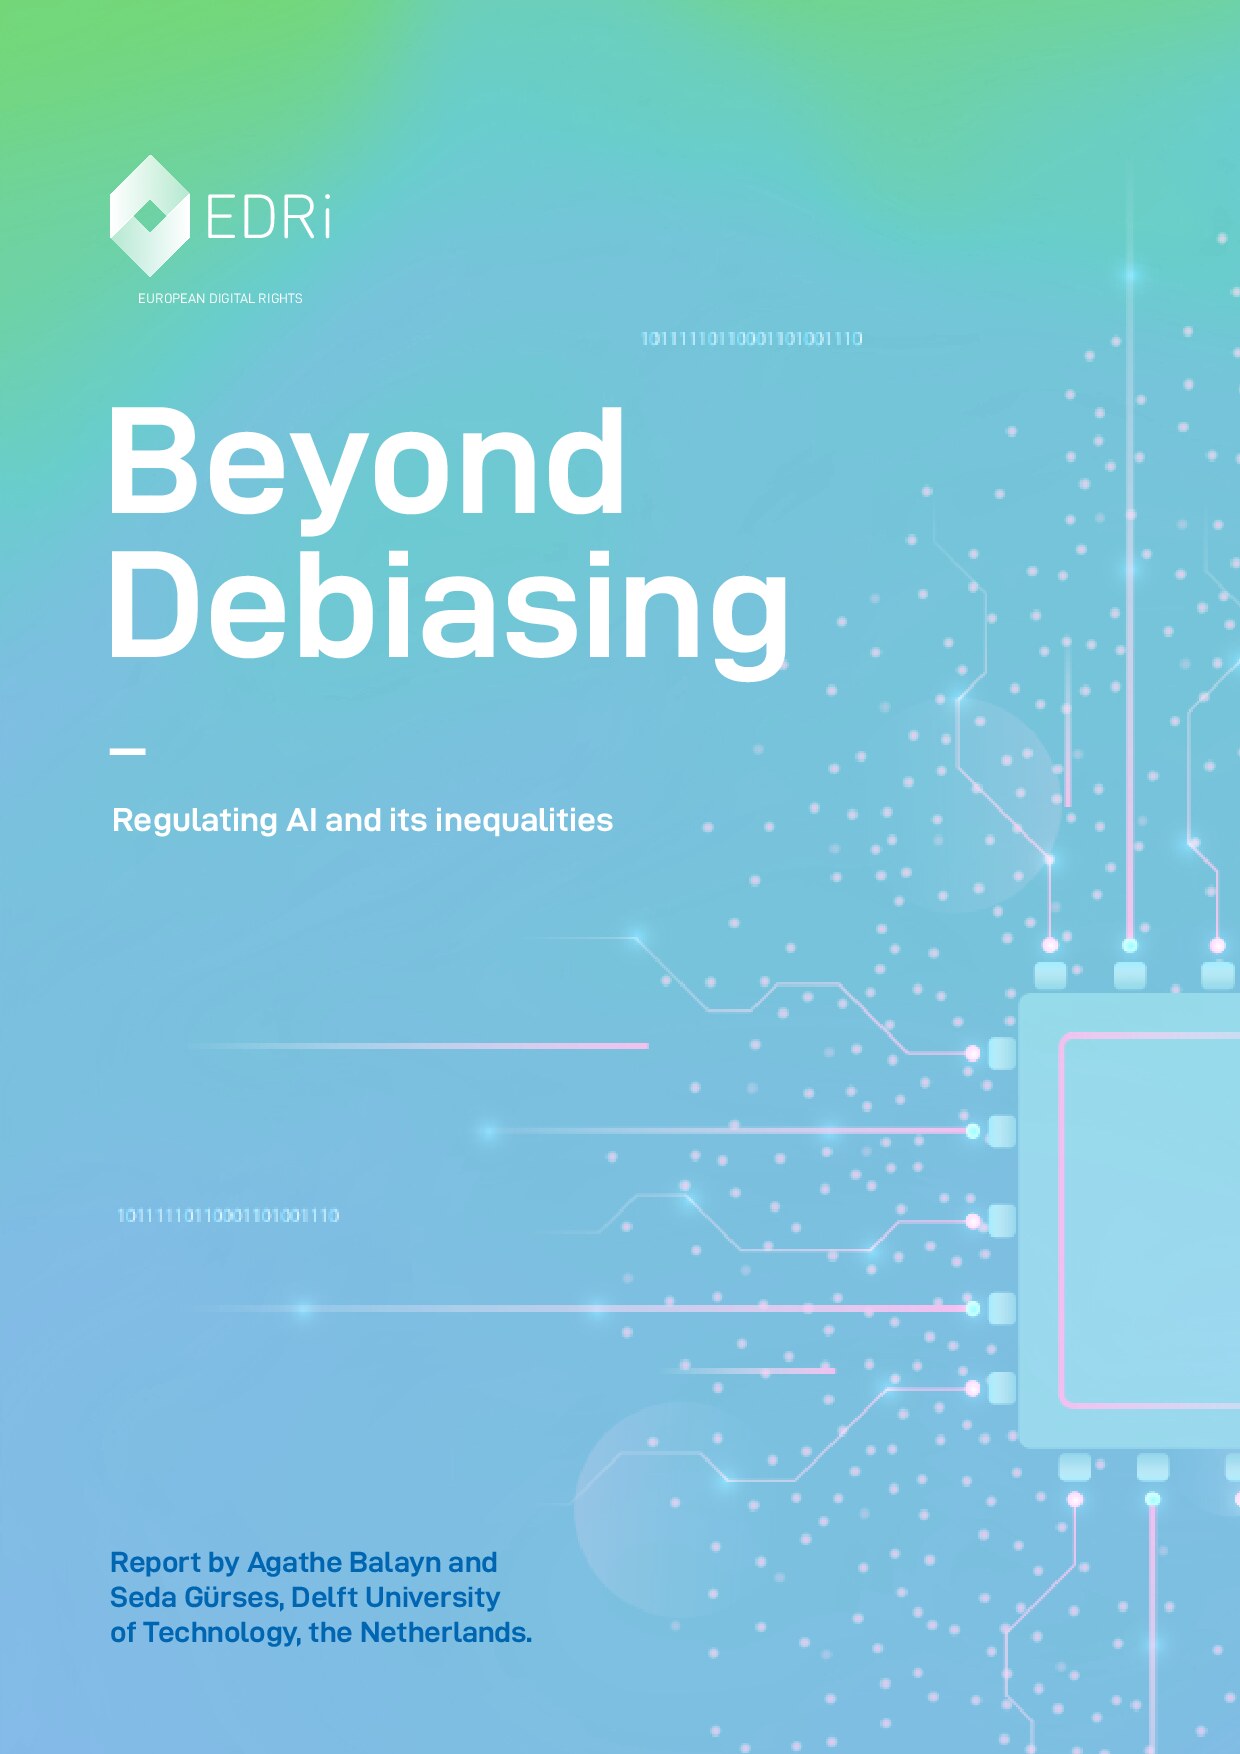 Beyond Debiasing: Regulating AI and its inequalities